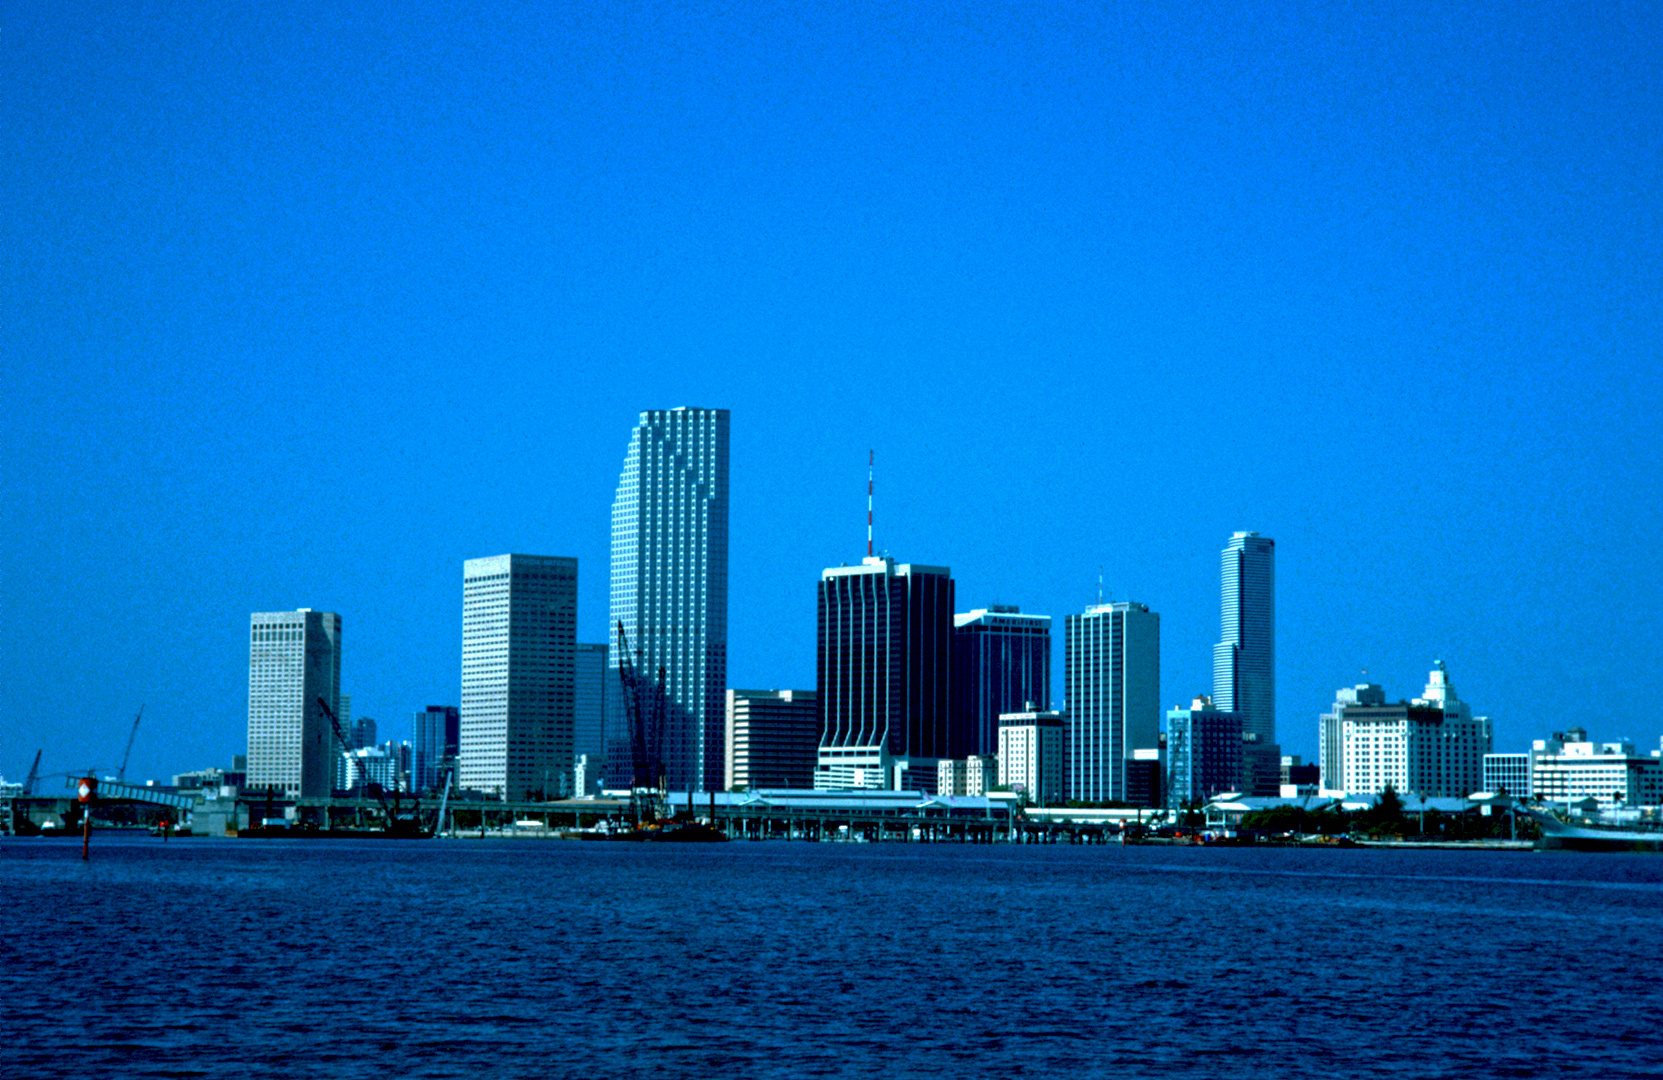 Miami Downtown, FL - 1989